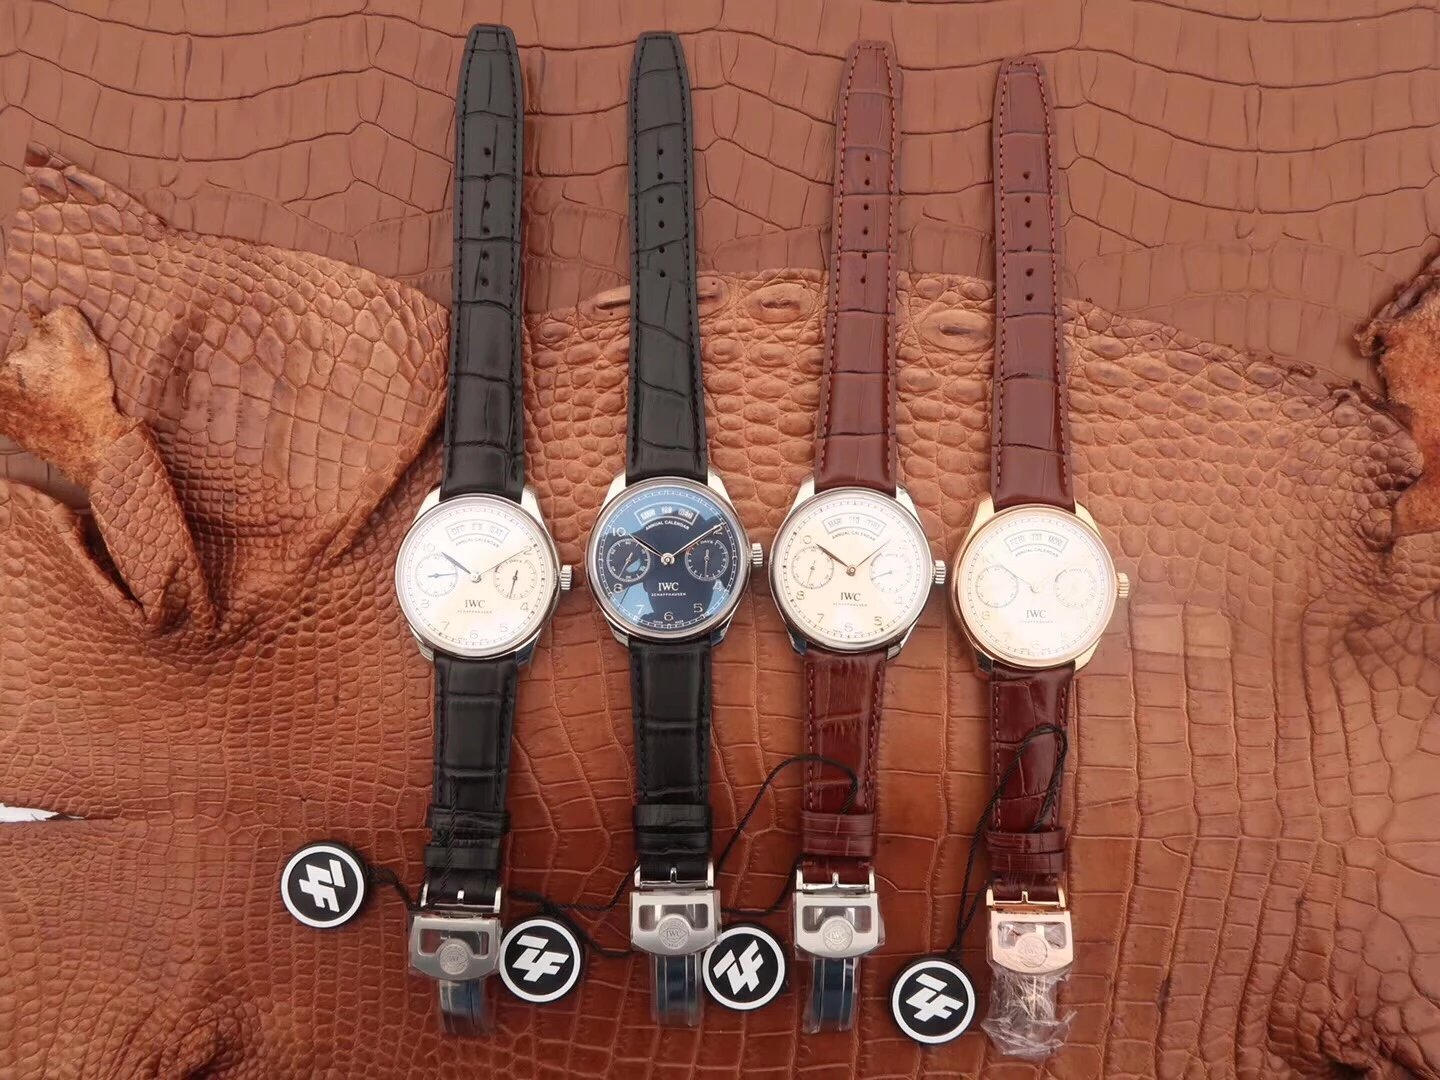 ZF厂手表葡萄牙系列年历腕表，最新版本，集时分针、日期、星期、月份和动显功能，真皮男士休闲腕表